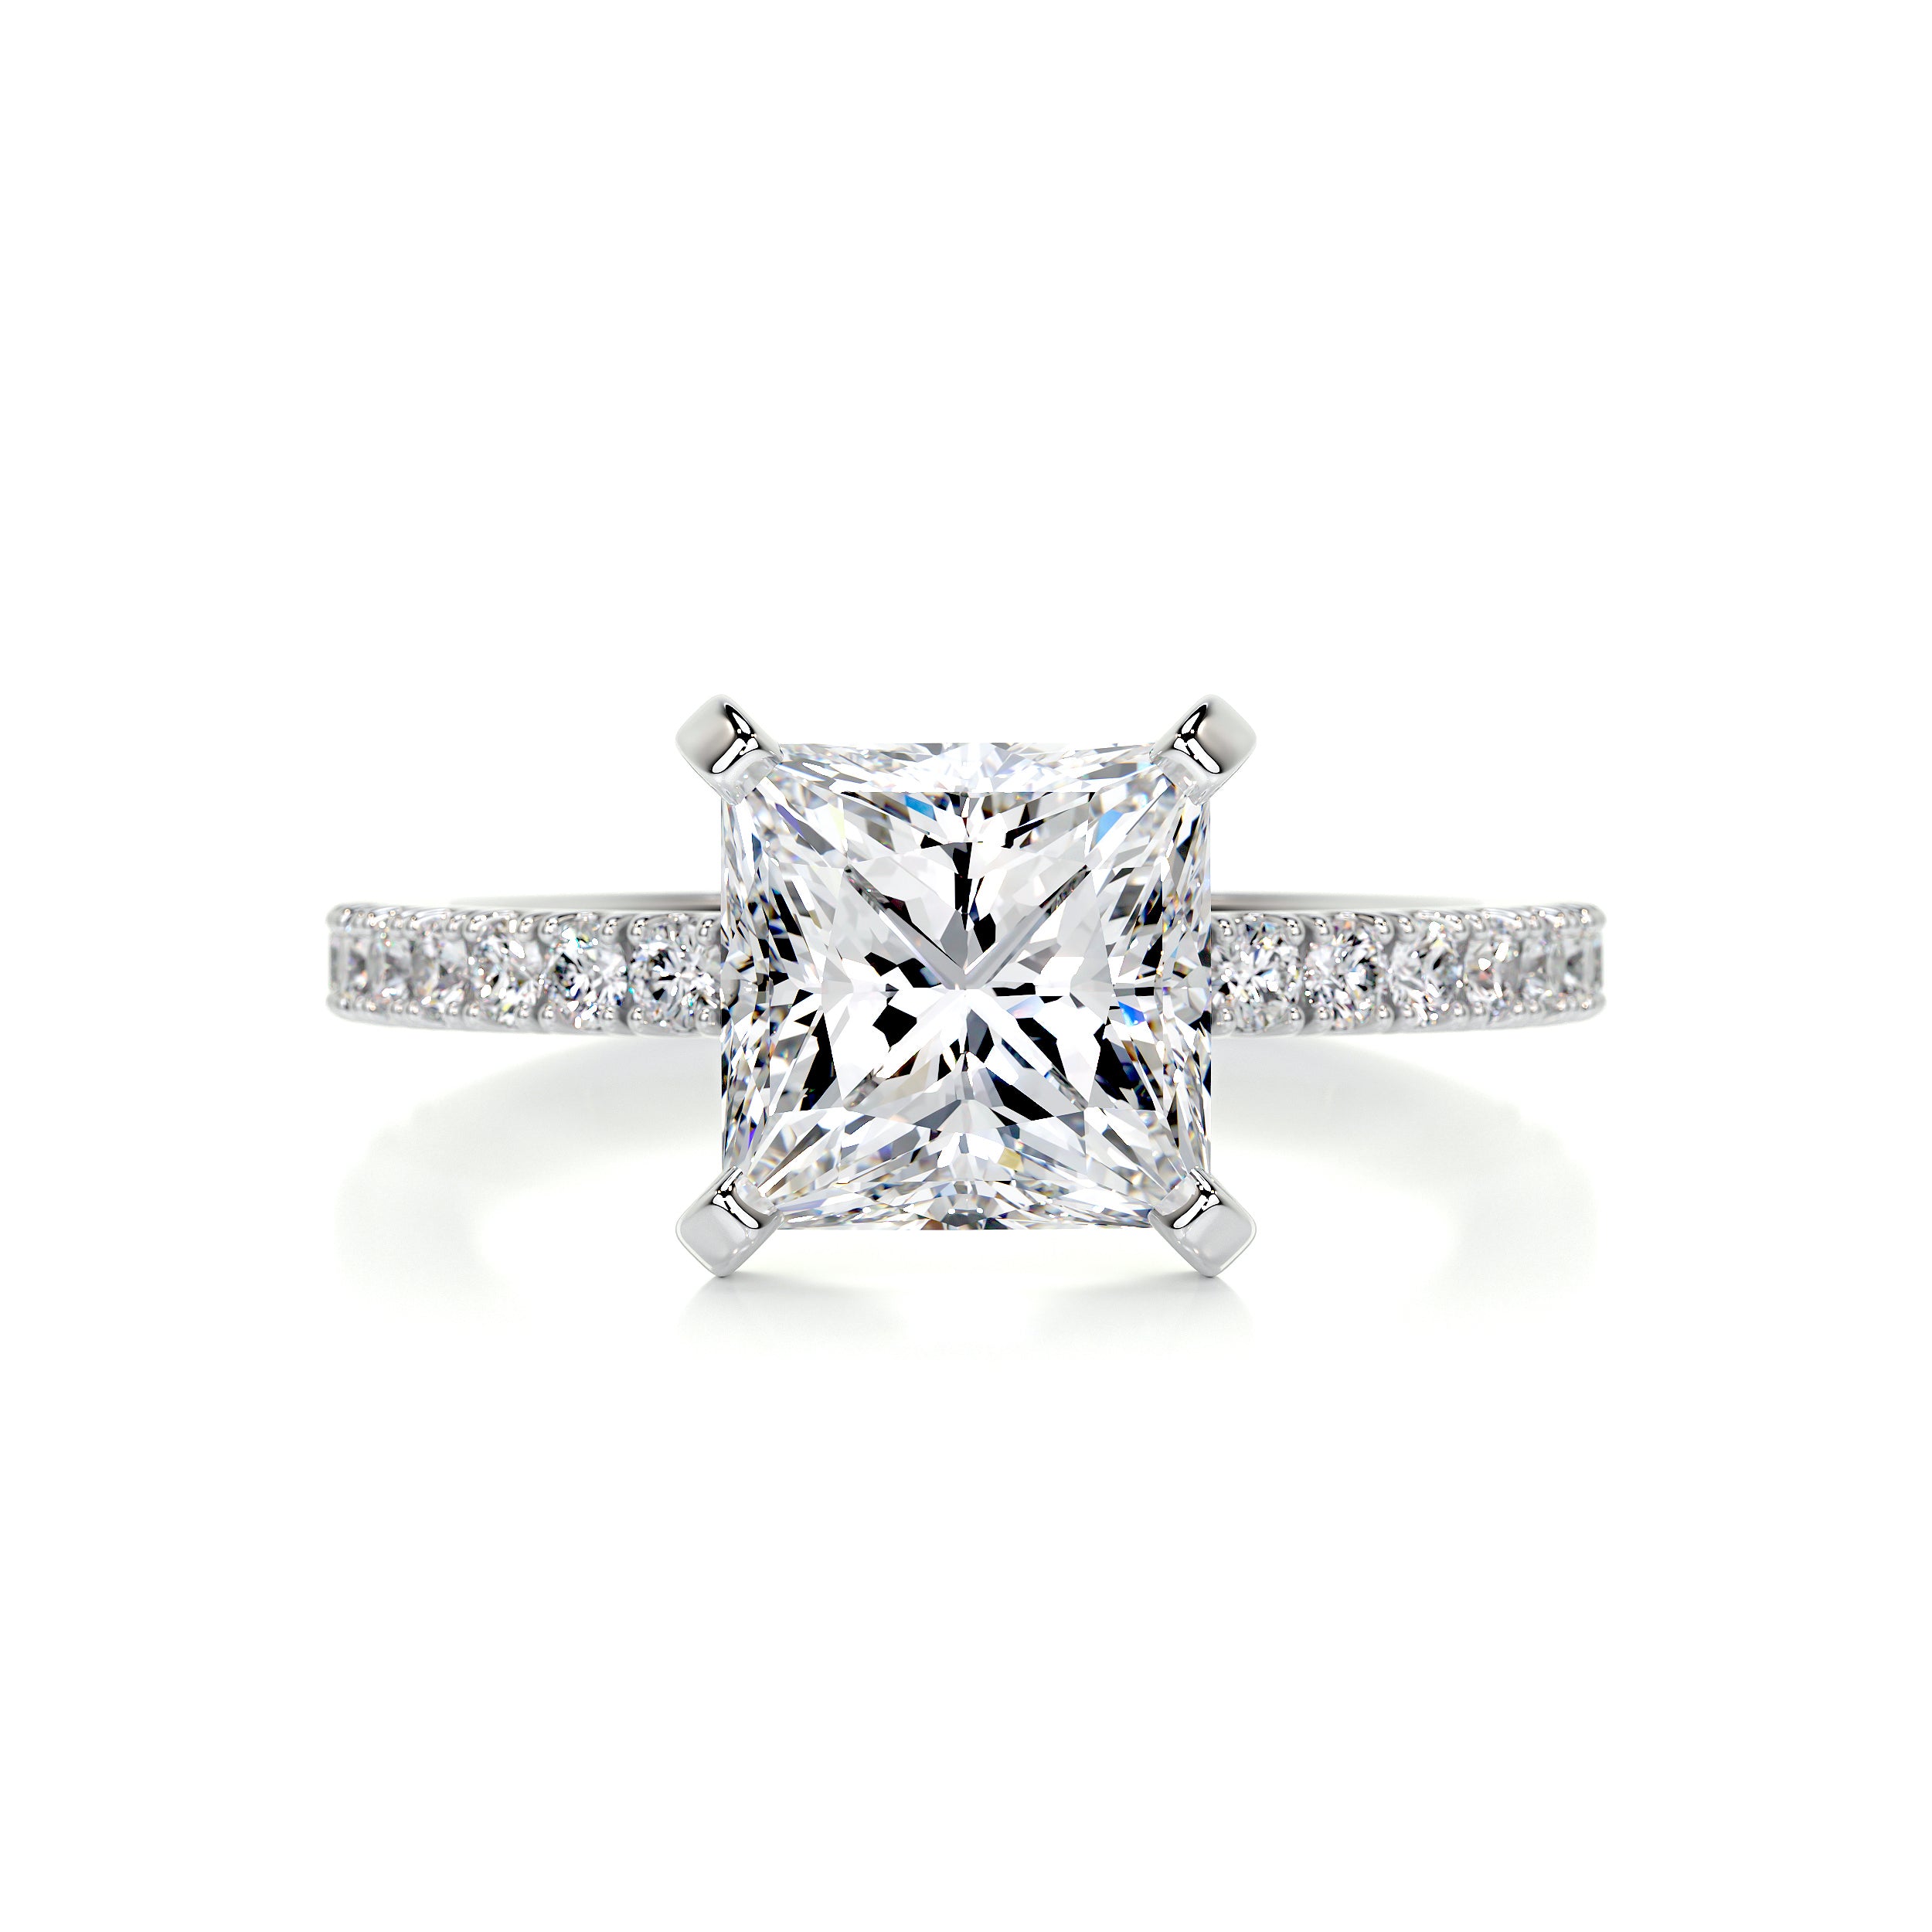 Stephanie Diamond Engagement Ring   (2.8 Carat) -14K White Gold